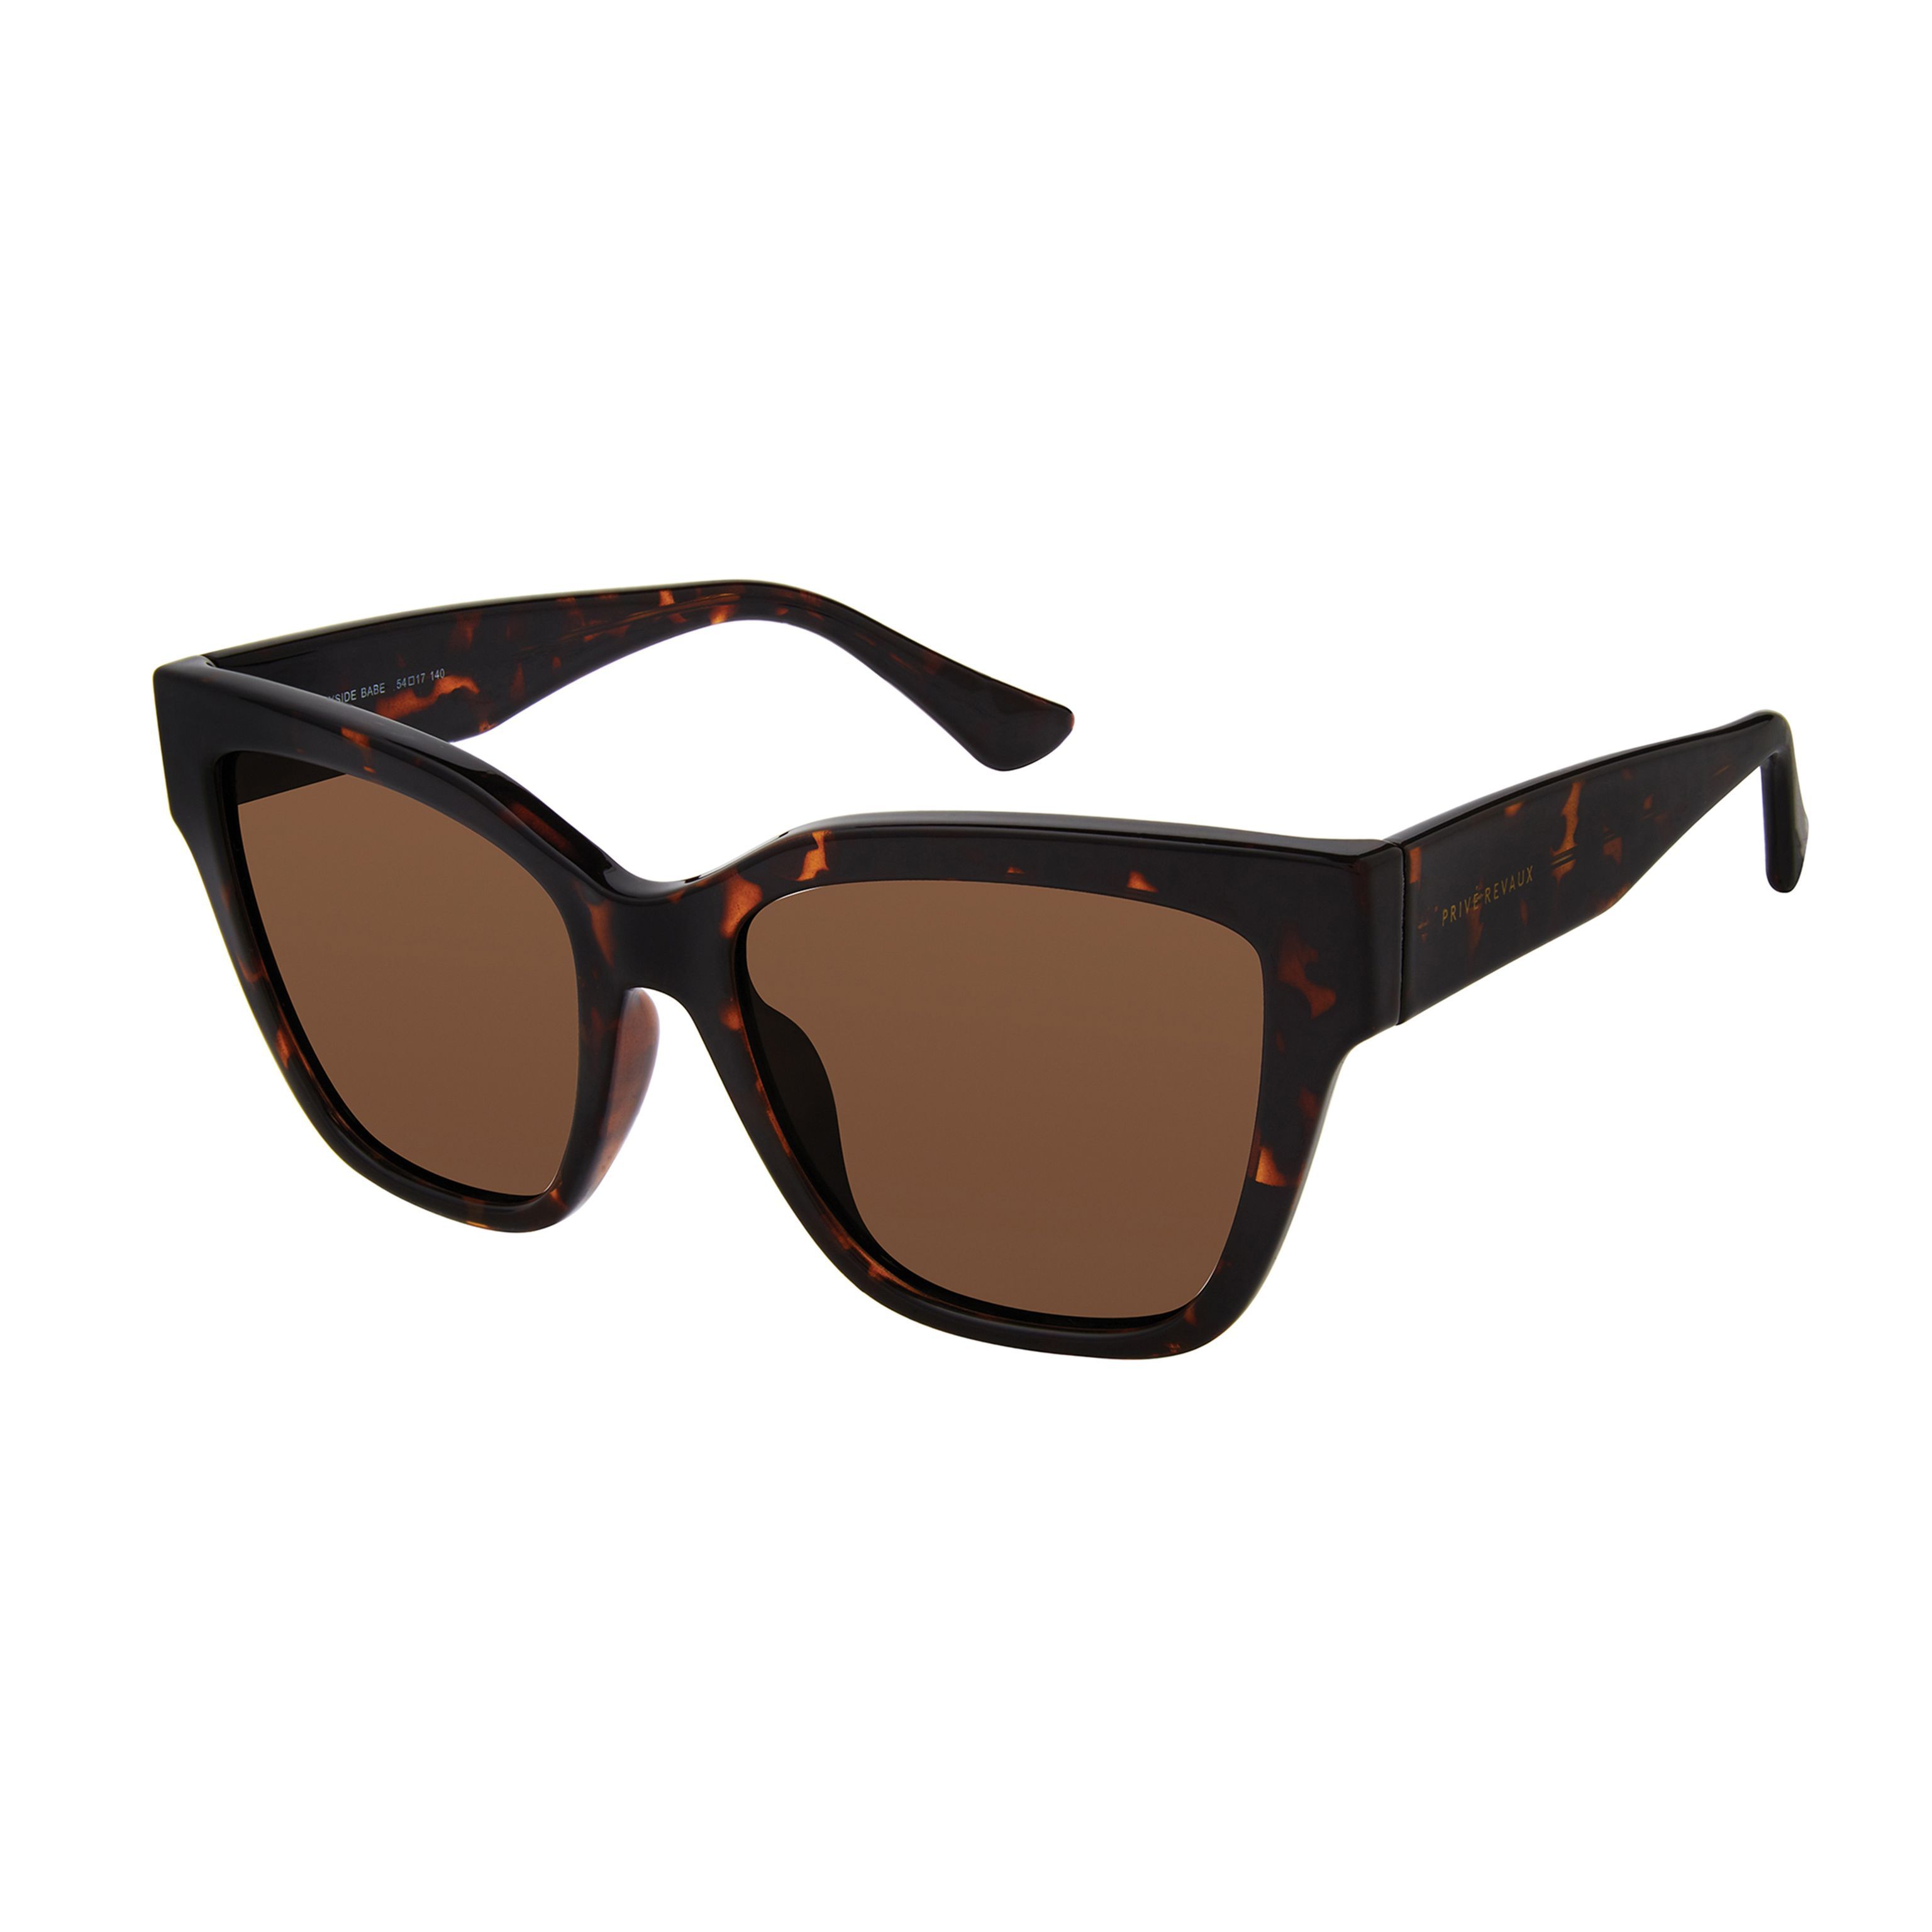 BAYSIDE BABE S Cateye Sunglasses 086 SP - size 54